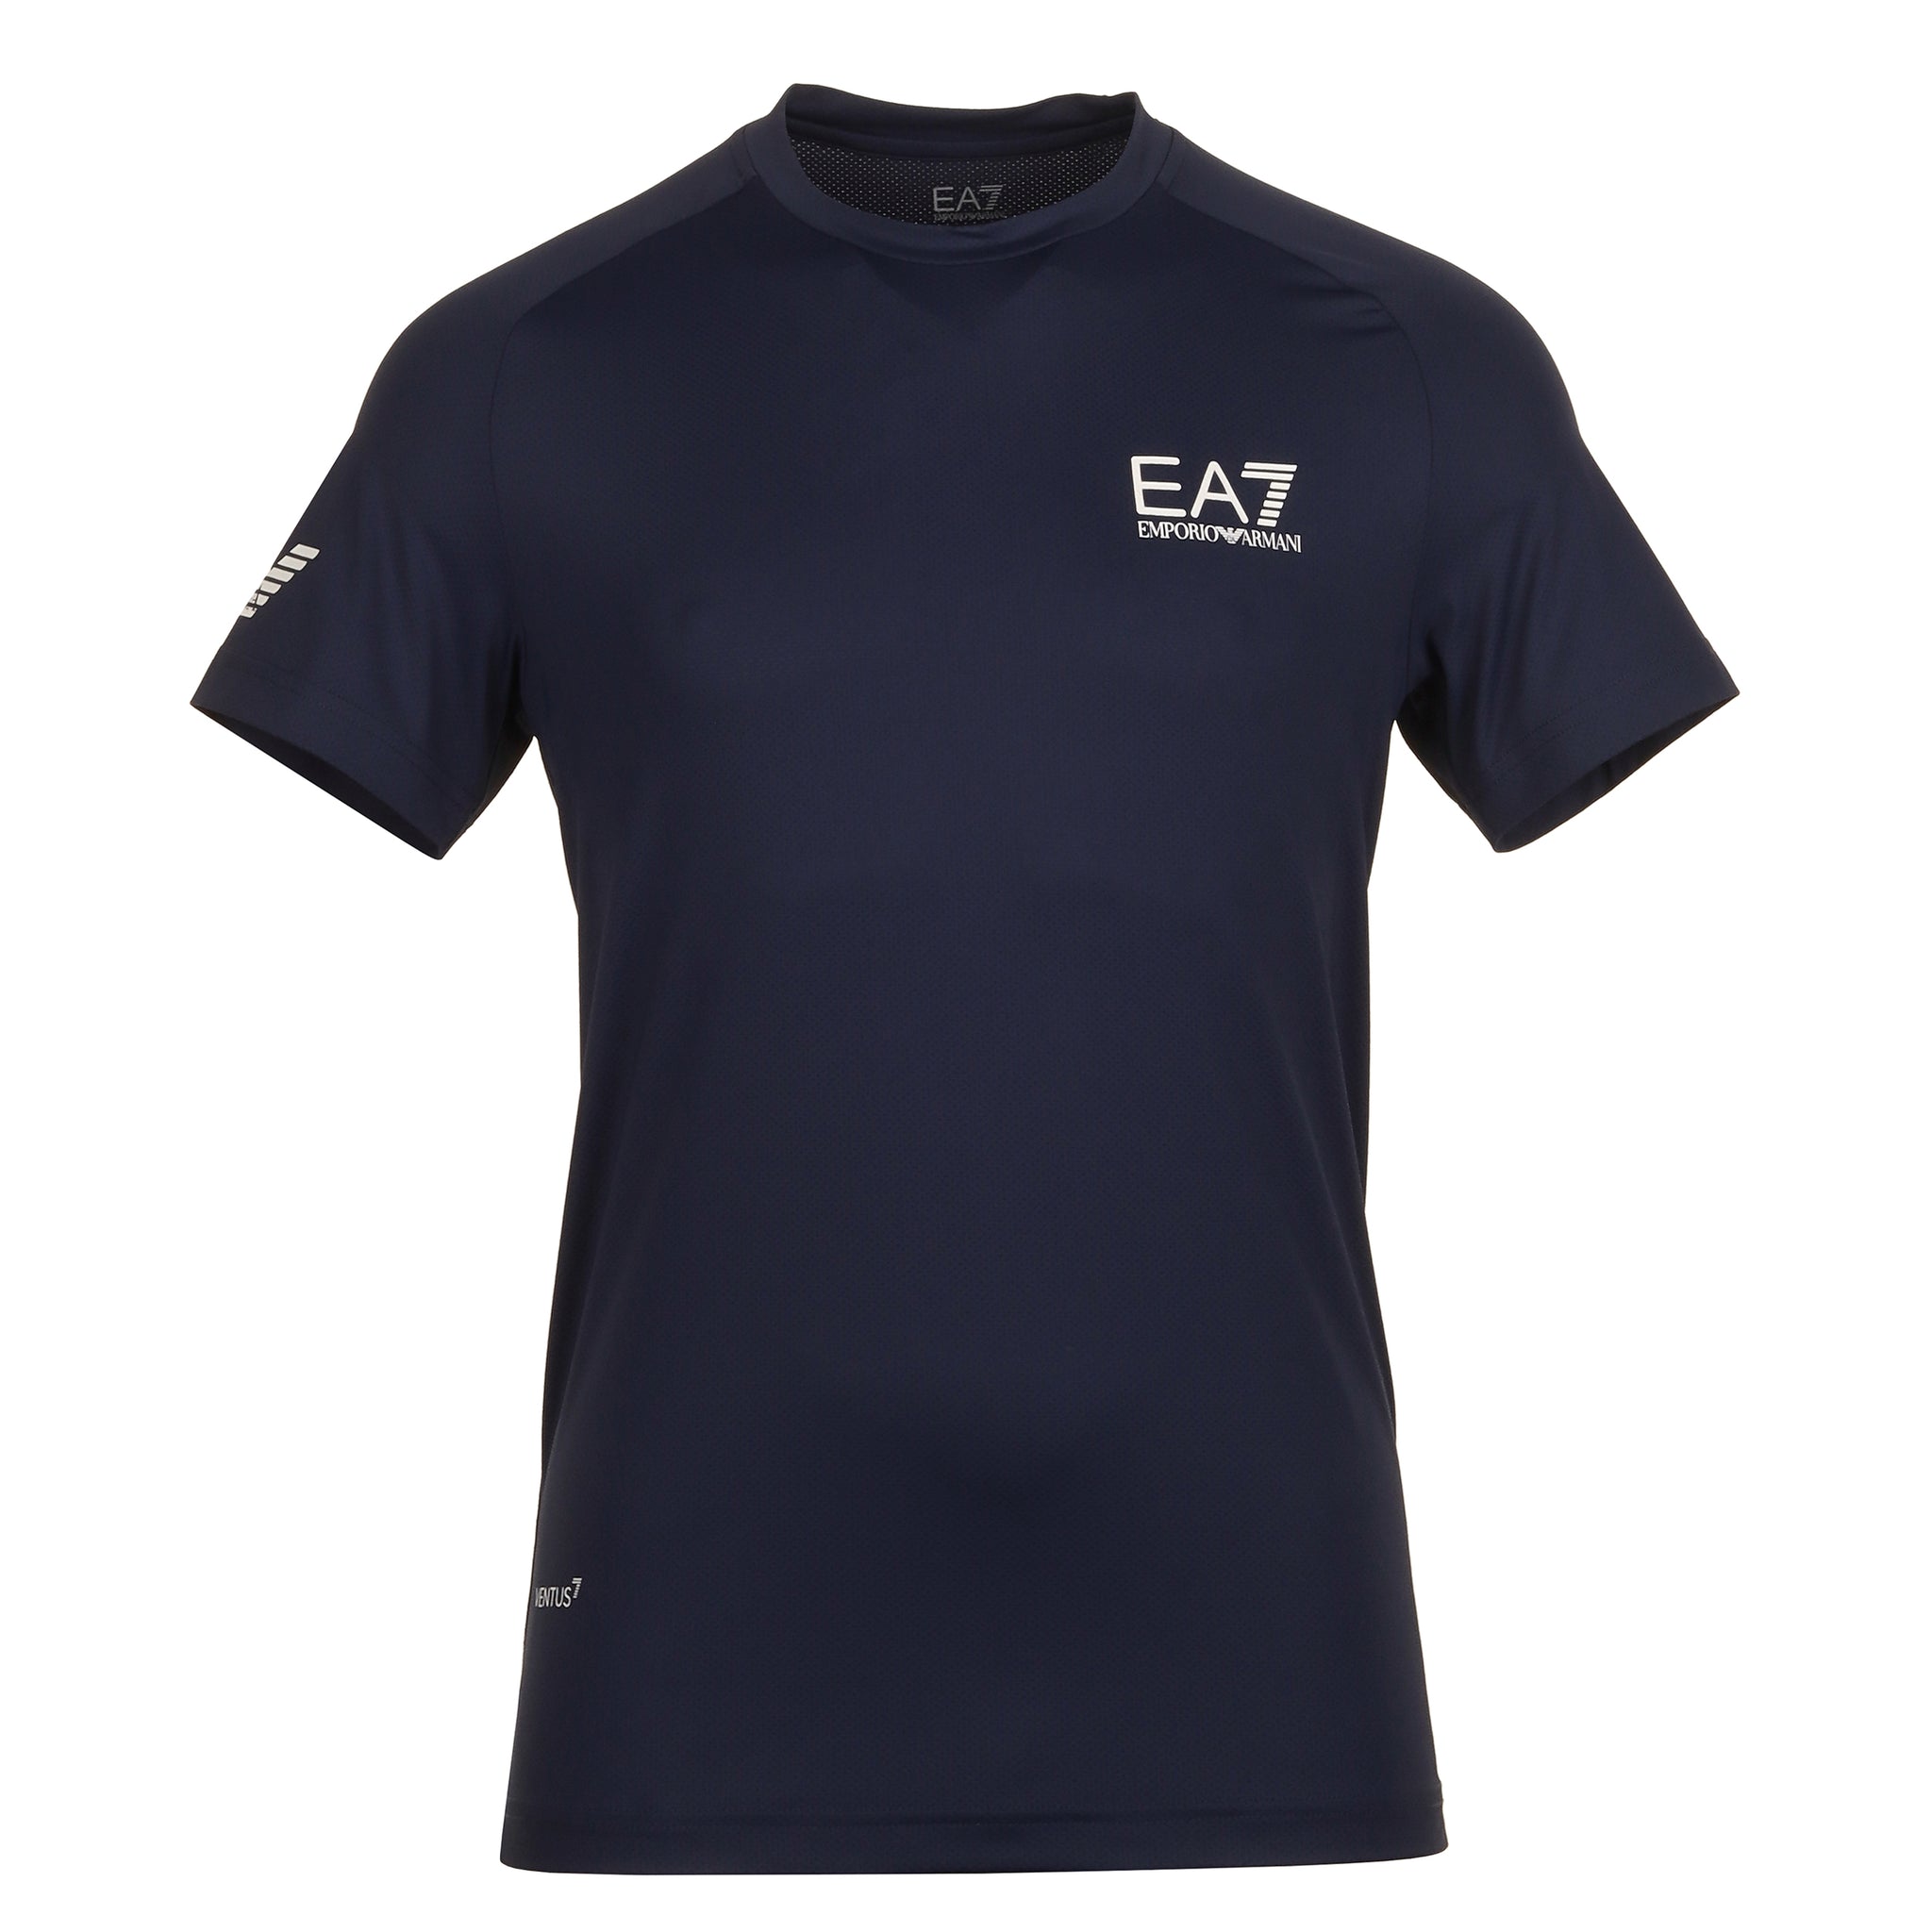 Emporio Armani EA7 Ventus7 Tee Shirt